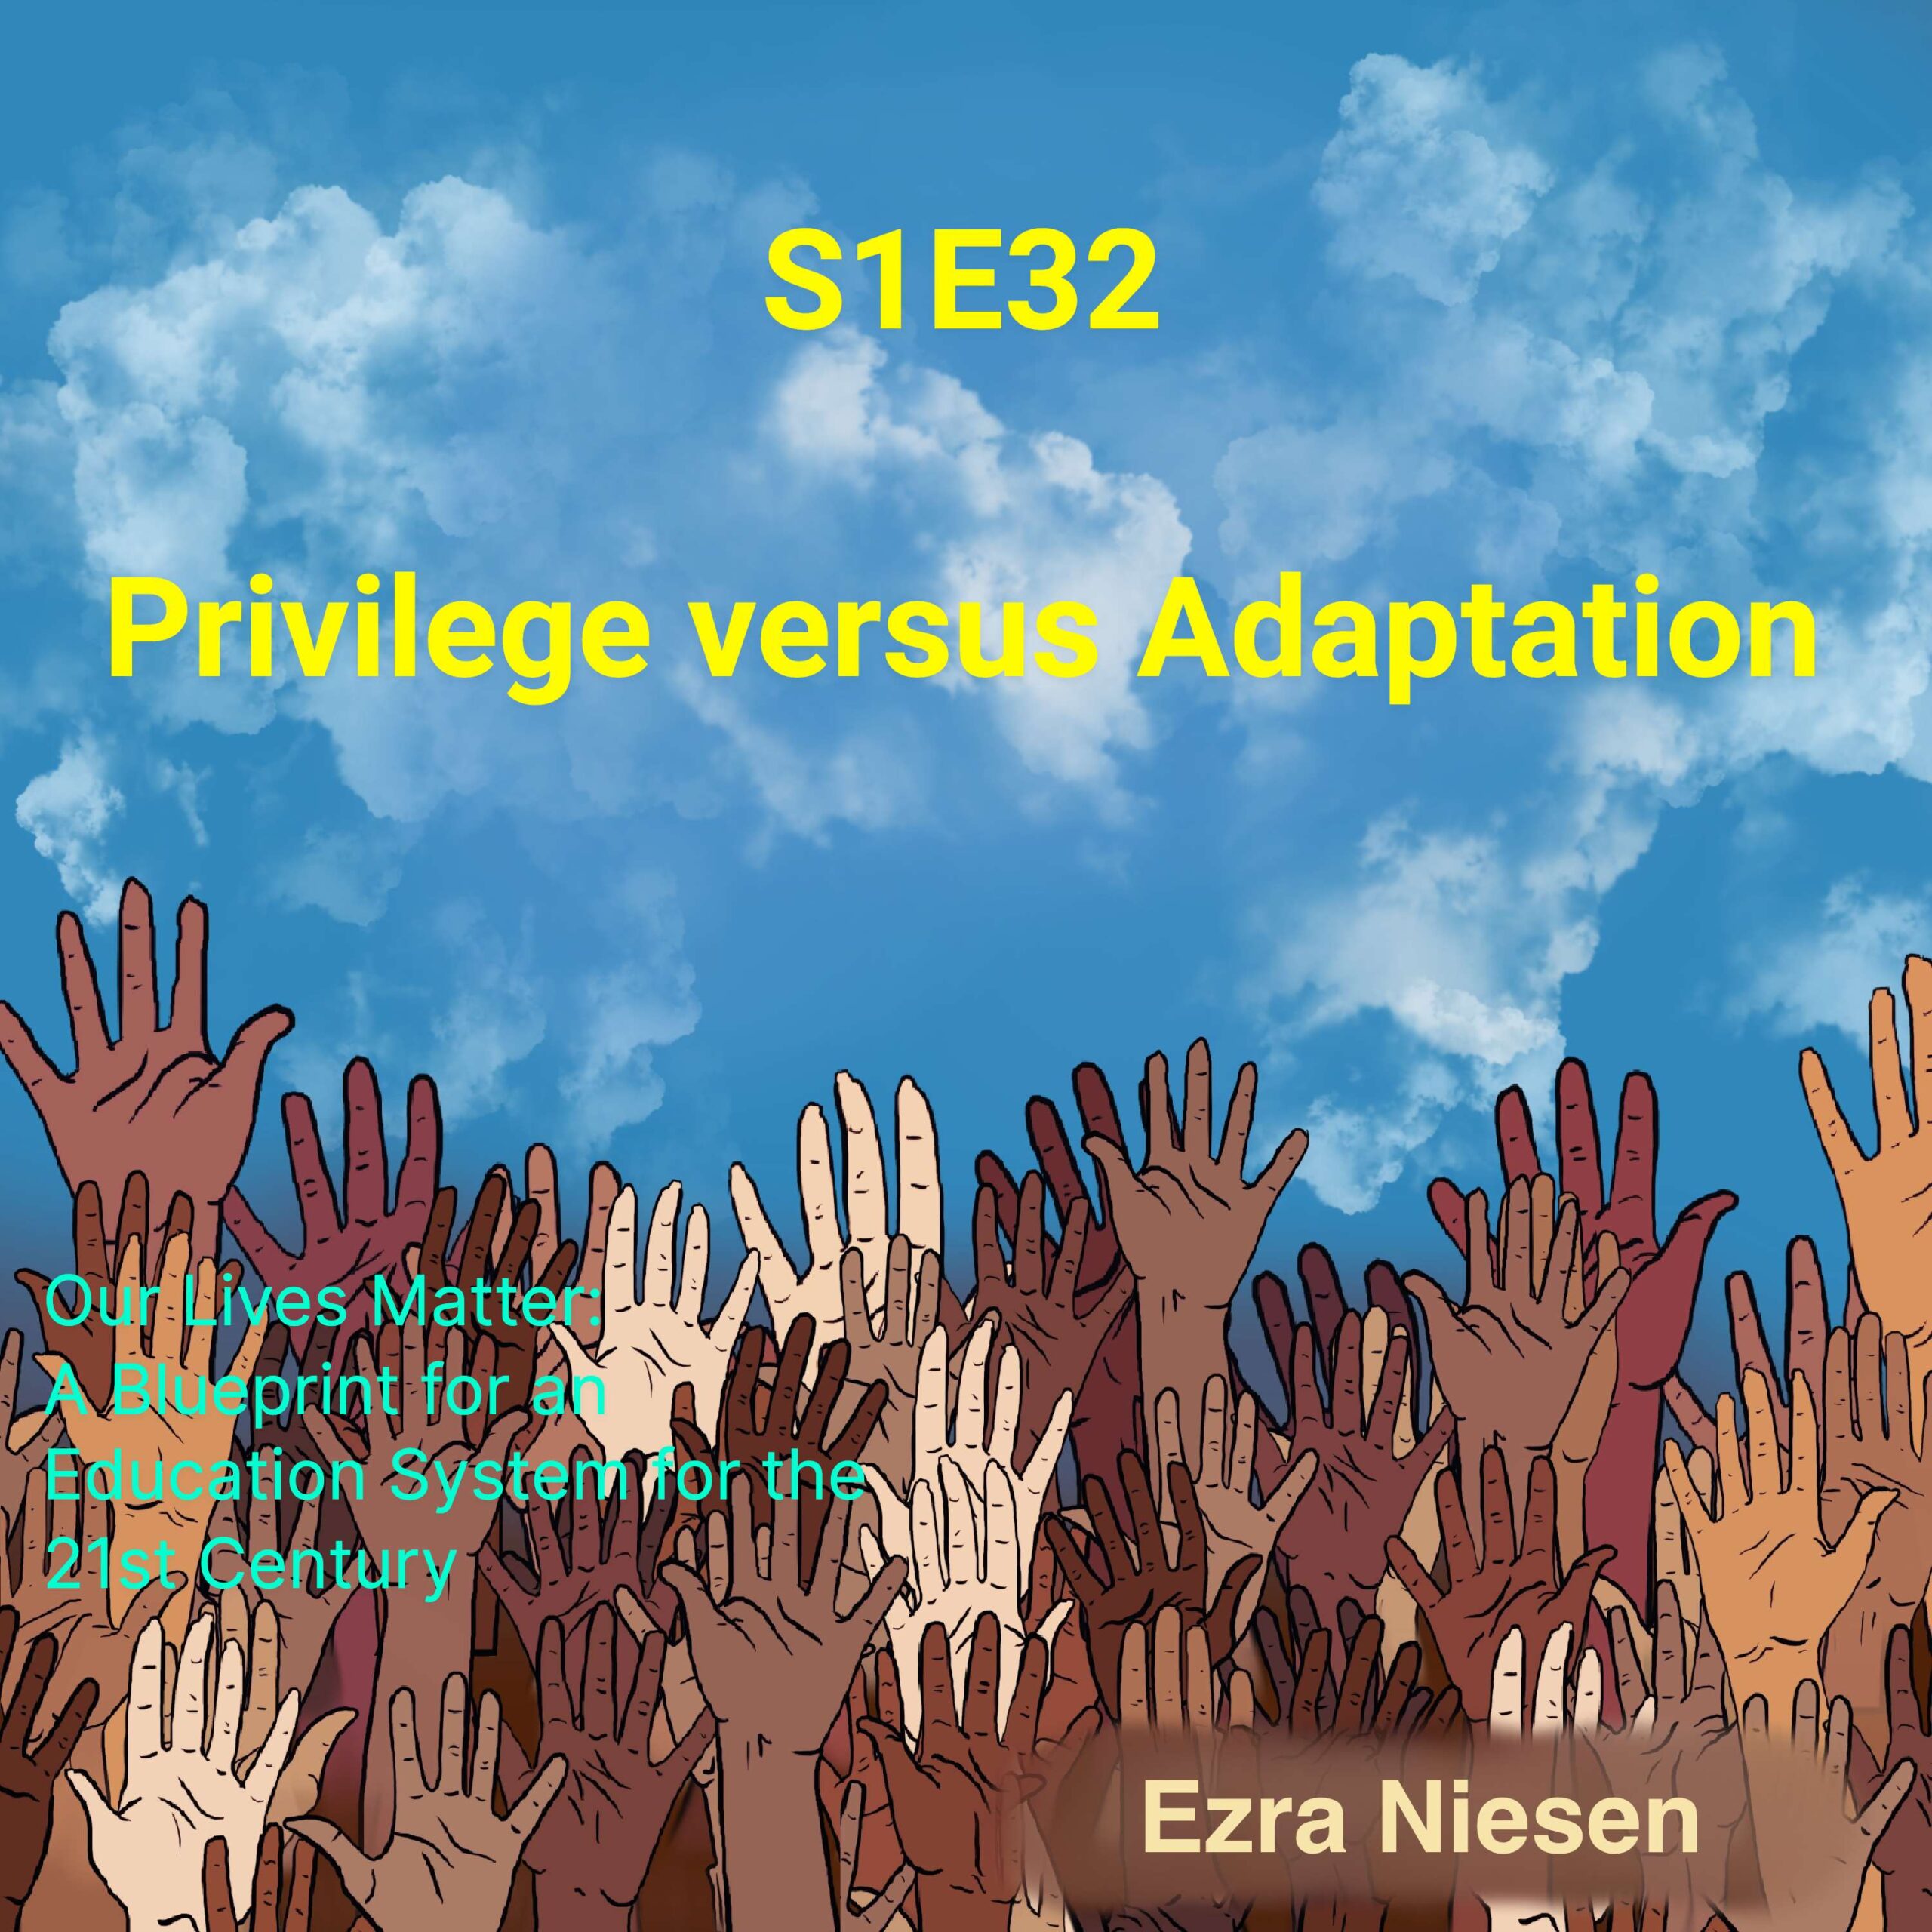 Our Lives Matter S1E32: Privilege versus Adaptation